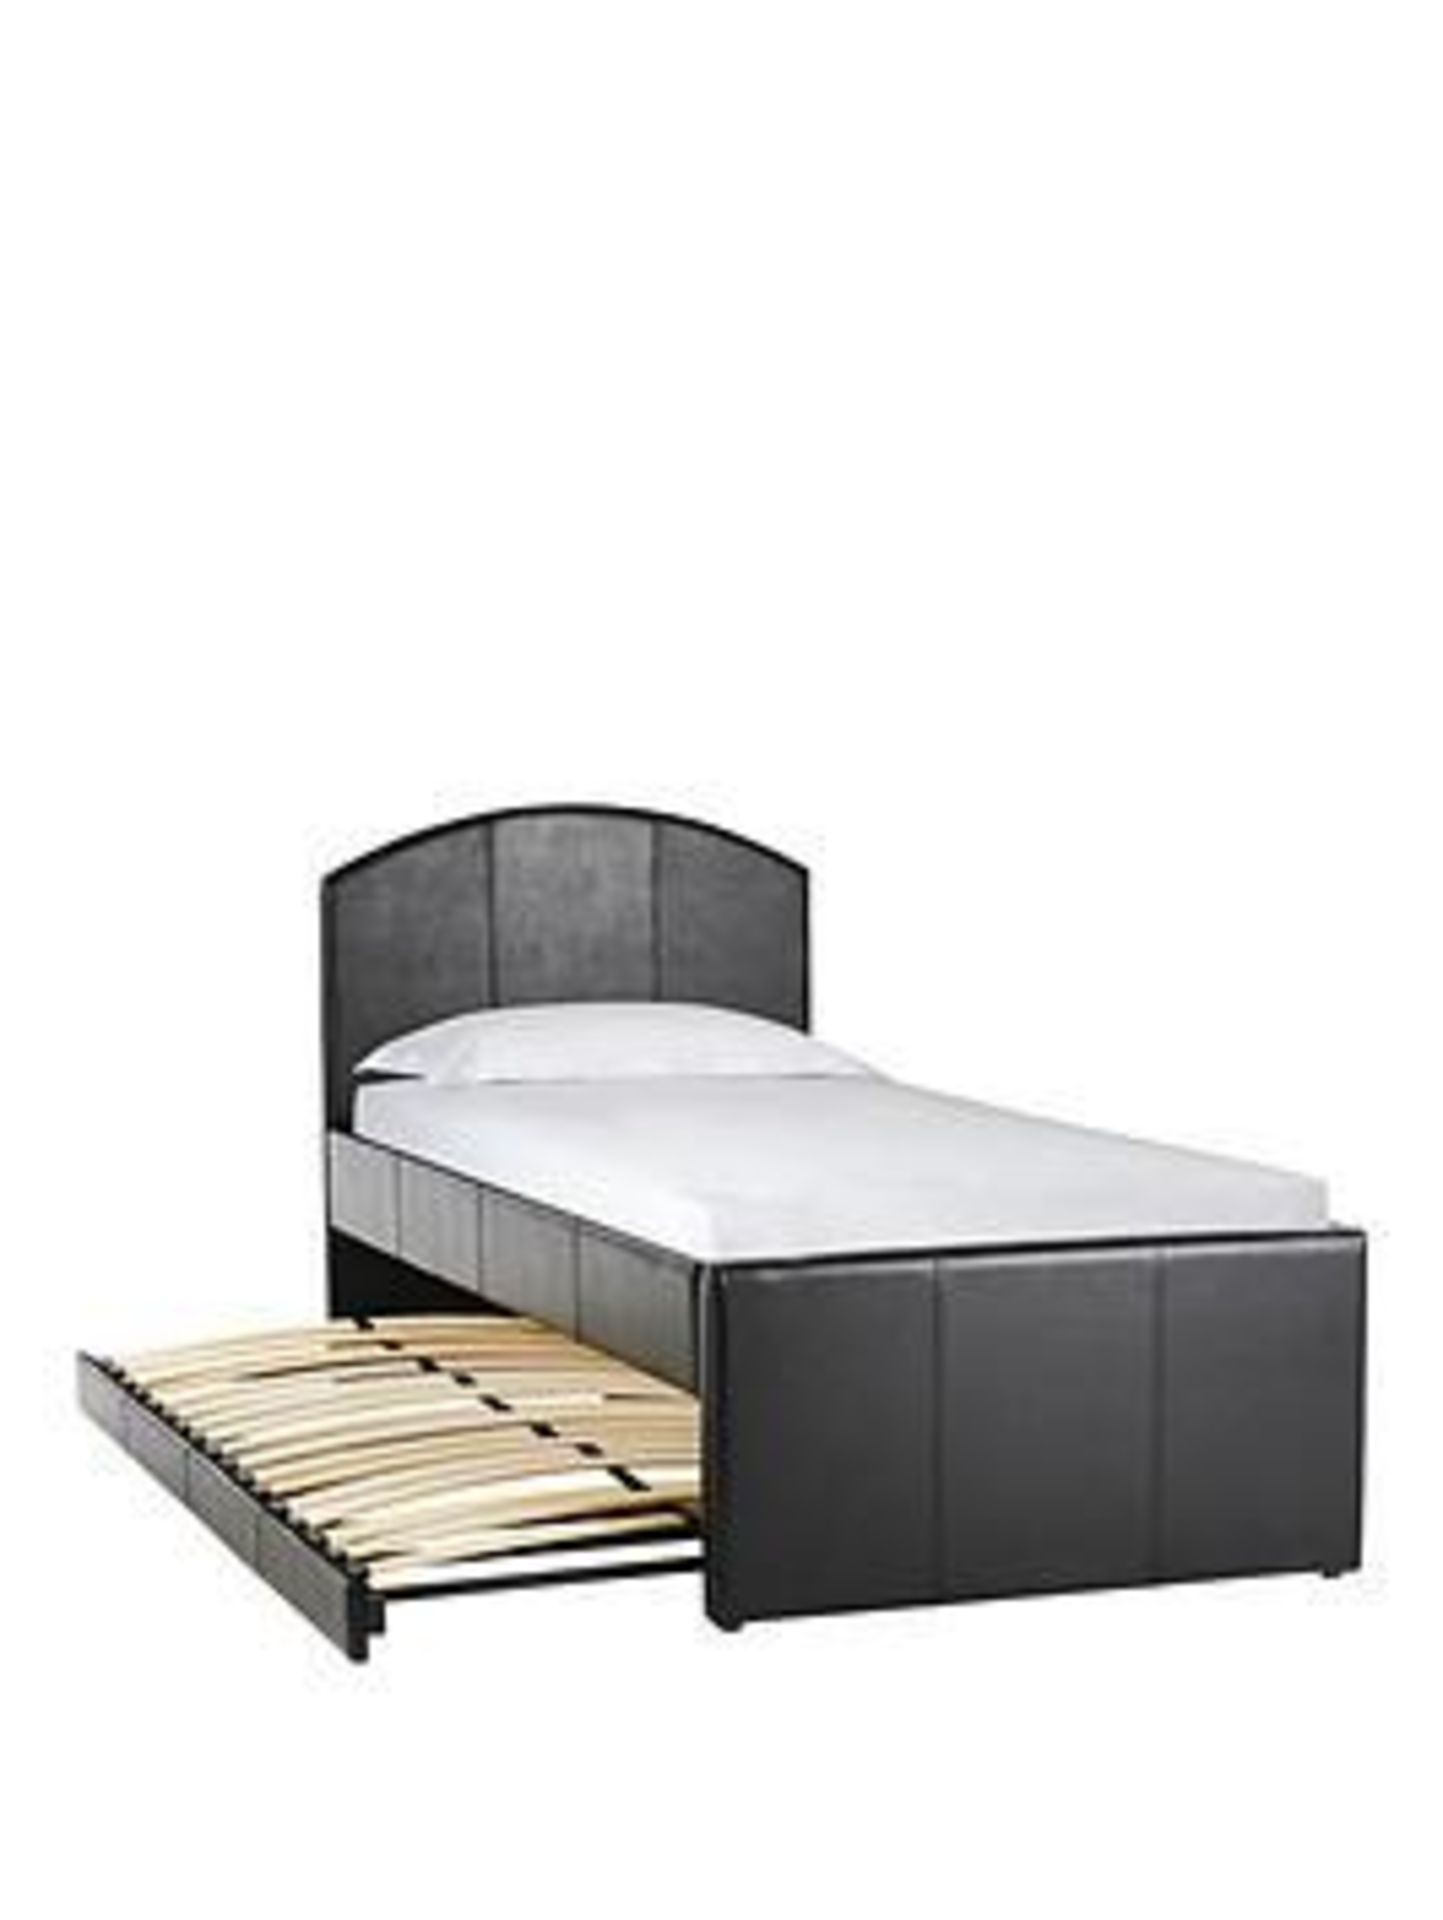 Boxed Item Libra Single Trundle Bed [Black] 110X97X202Cm Rrp:£370.0